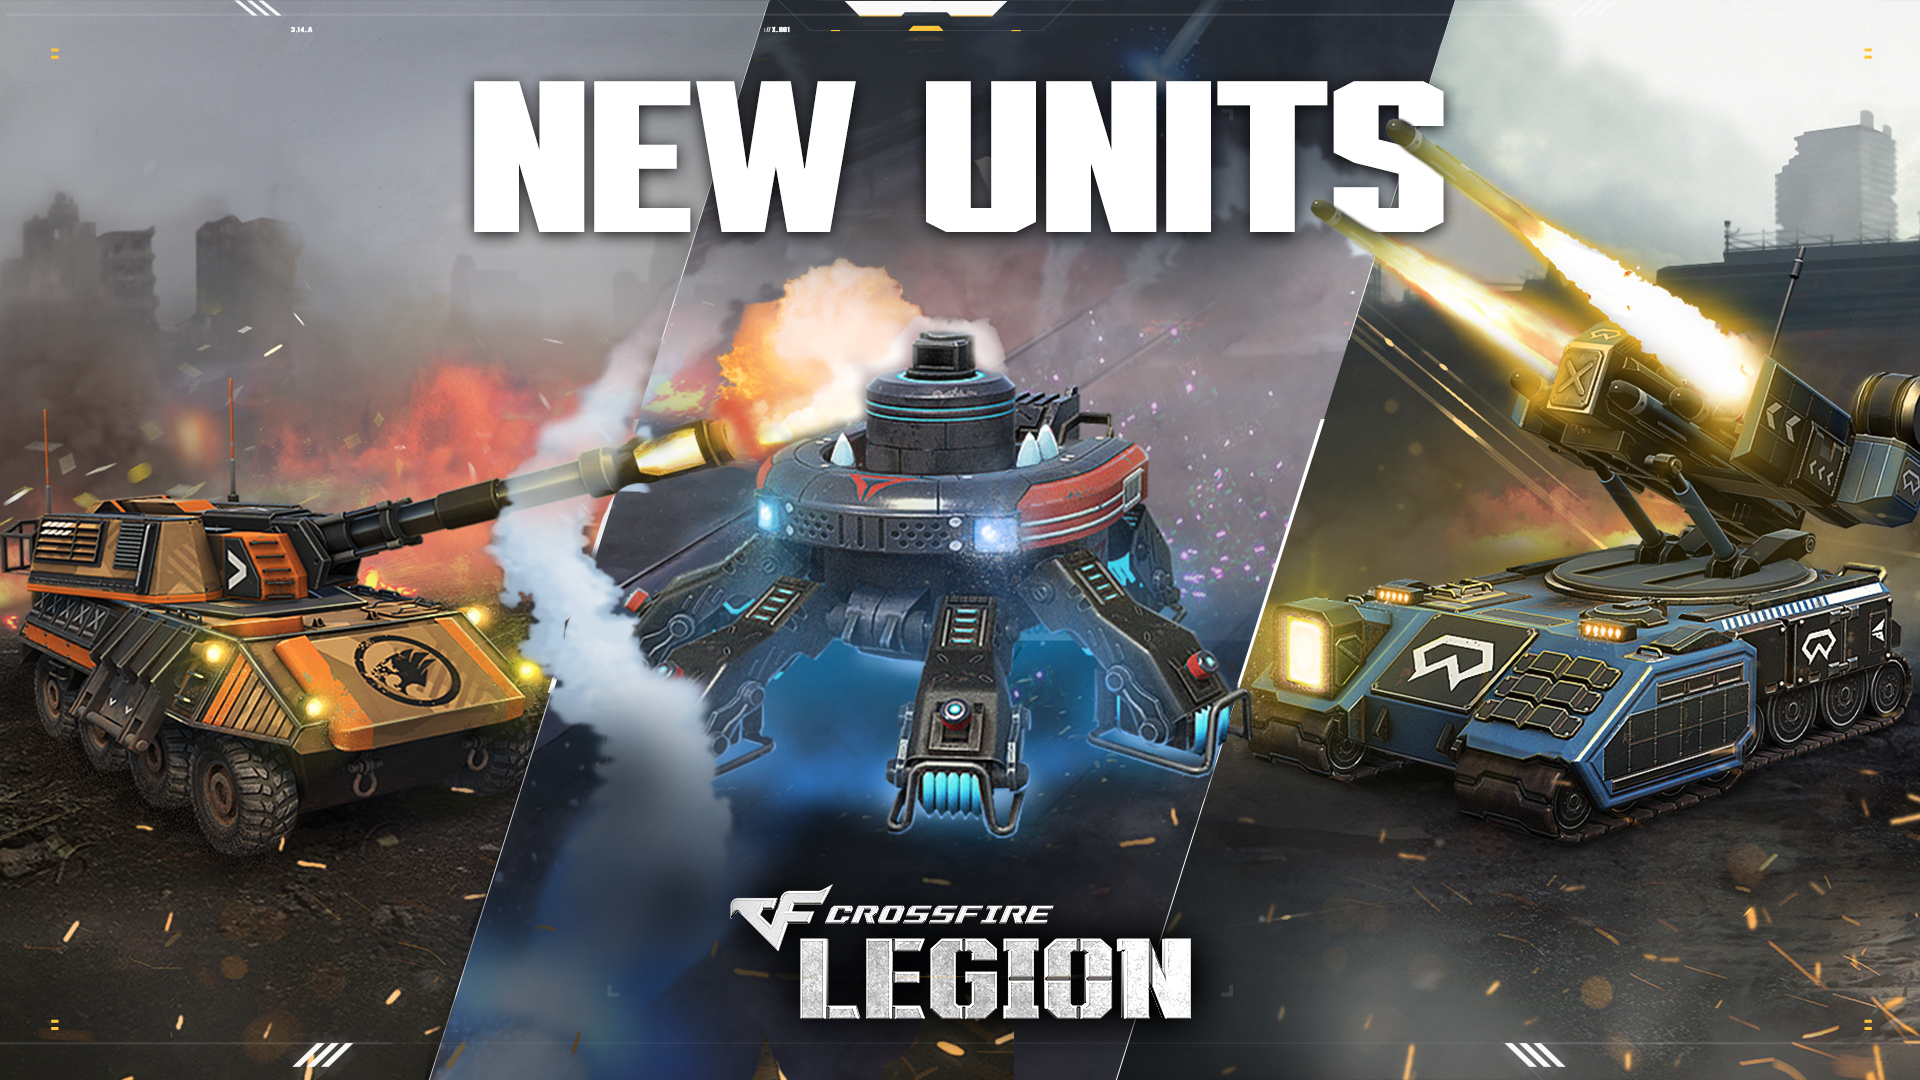 Crossfire: Legion on Steam